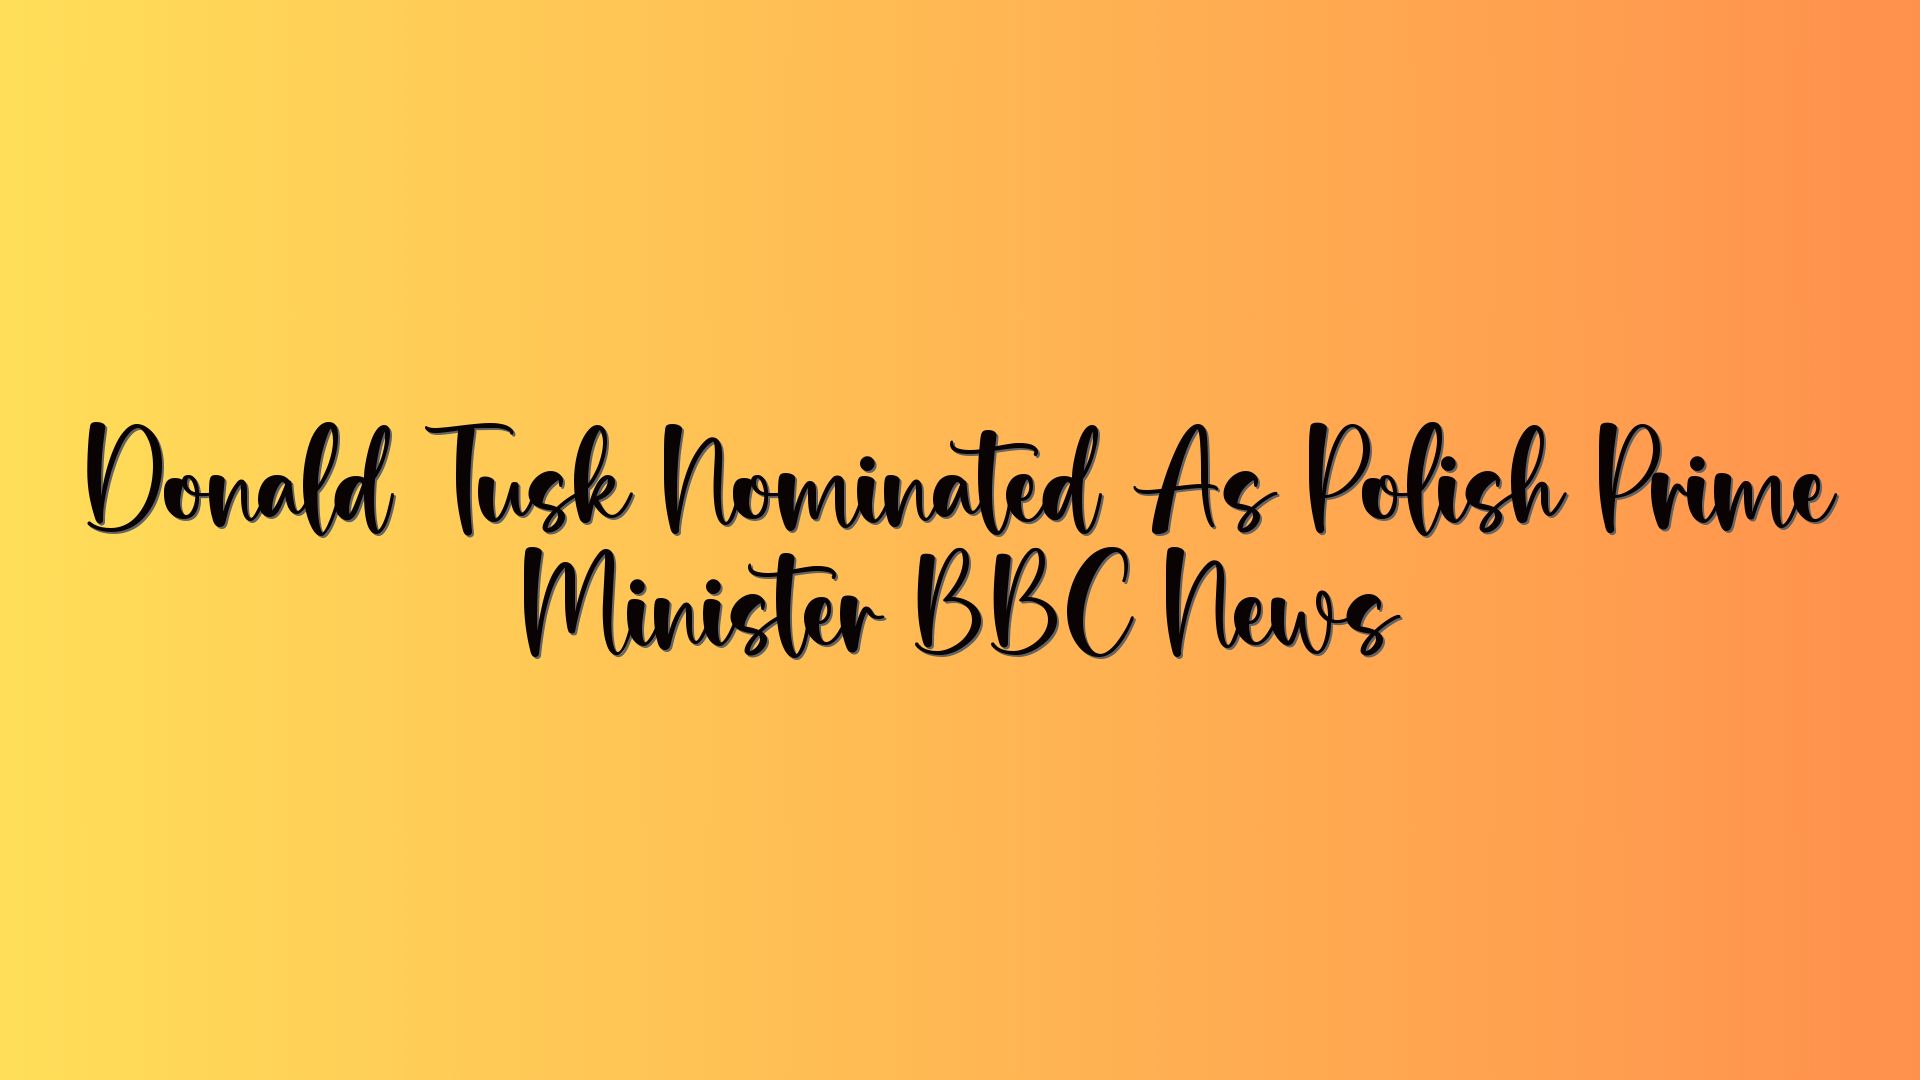 Donald Tusk Nominated As Polish Prime Minister BBC News